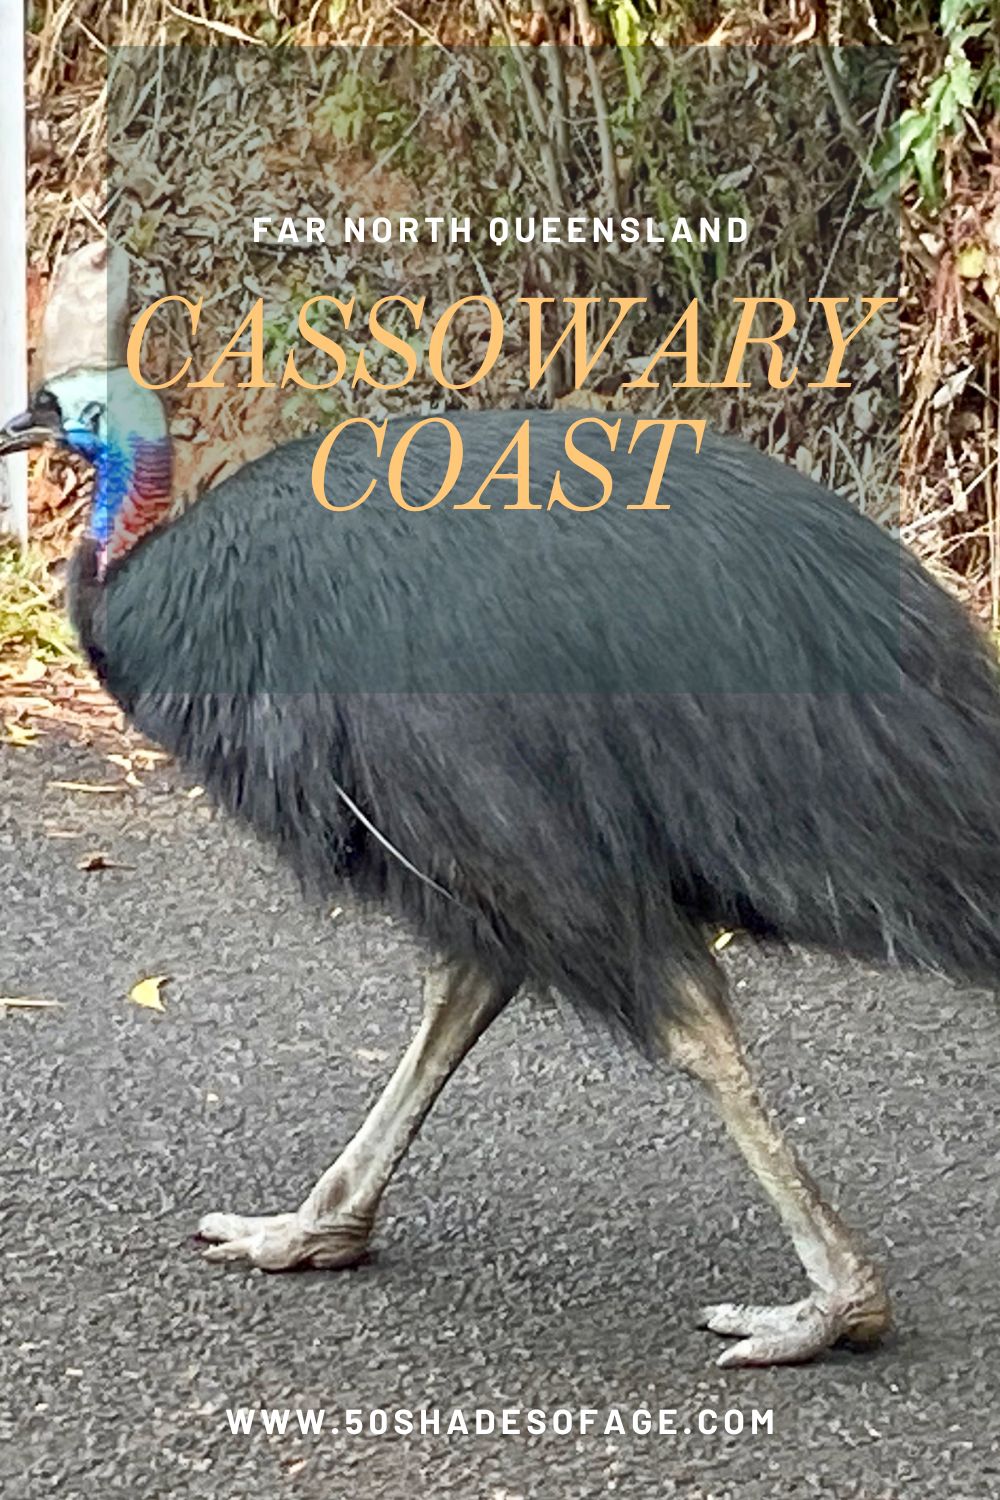 Far North Queensland – Cassowary Coast